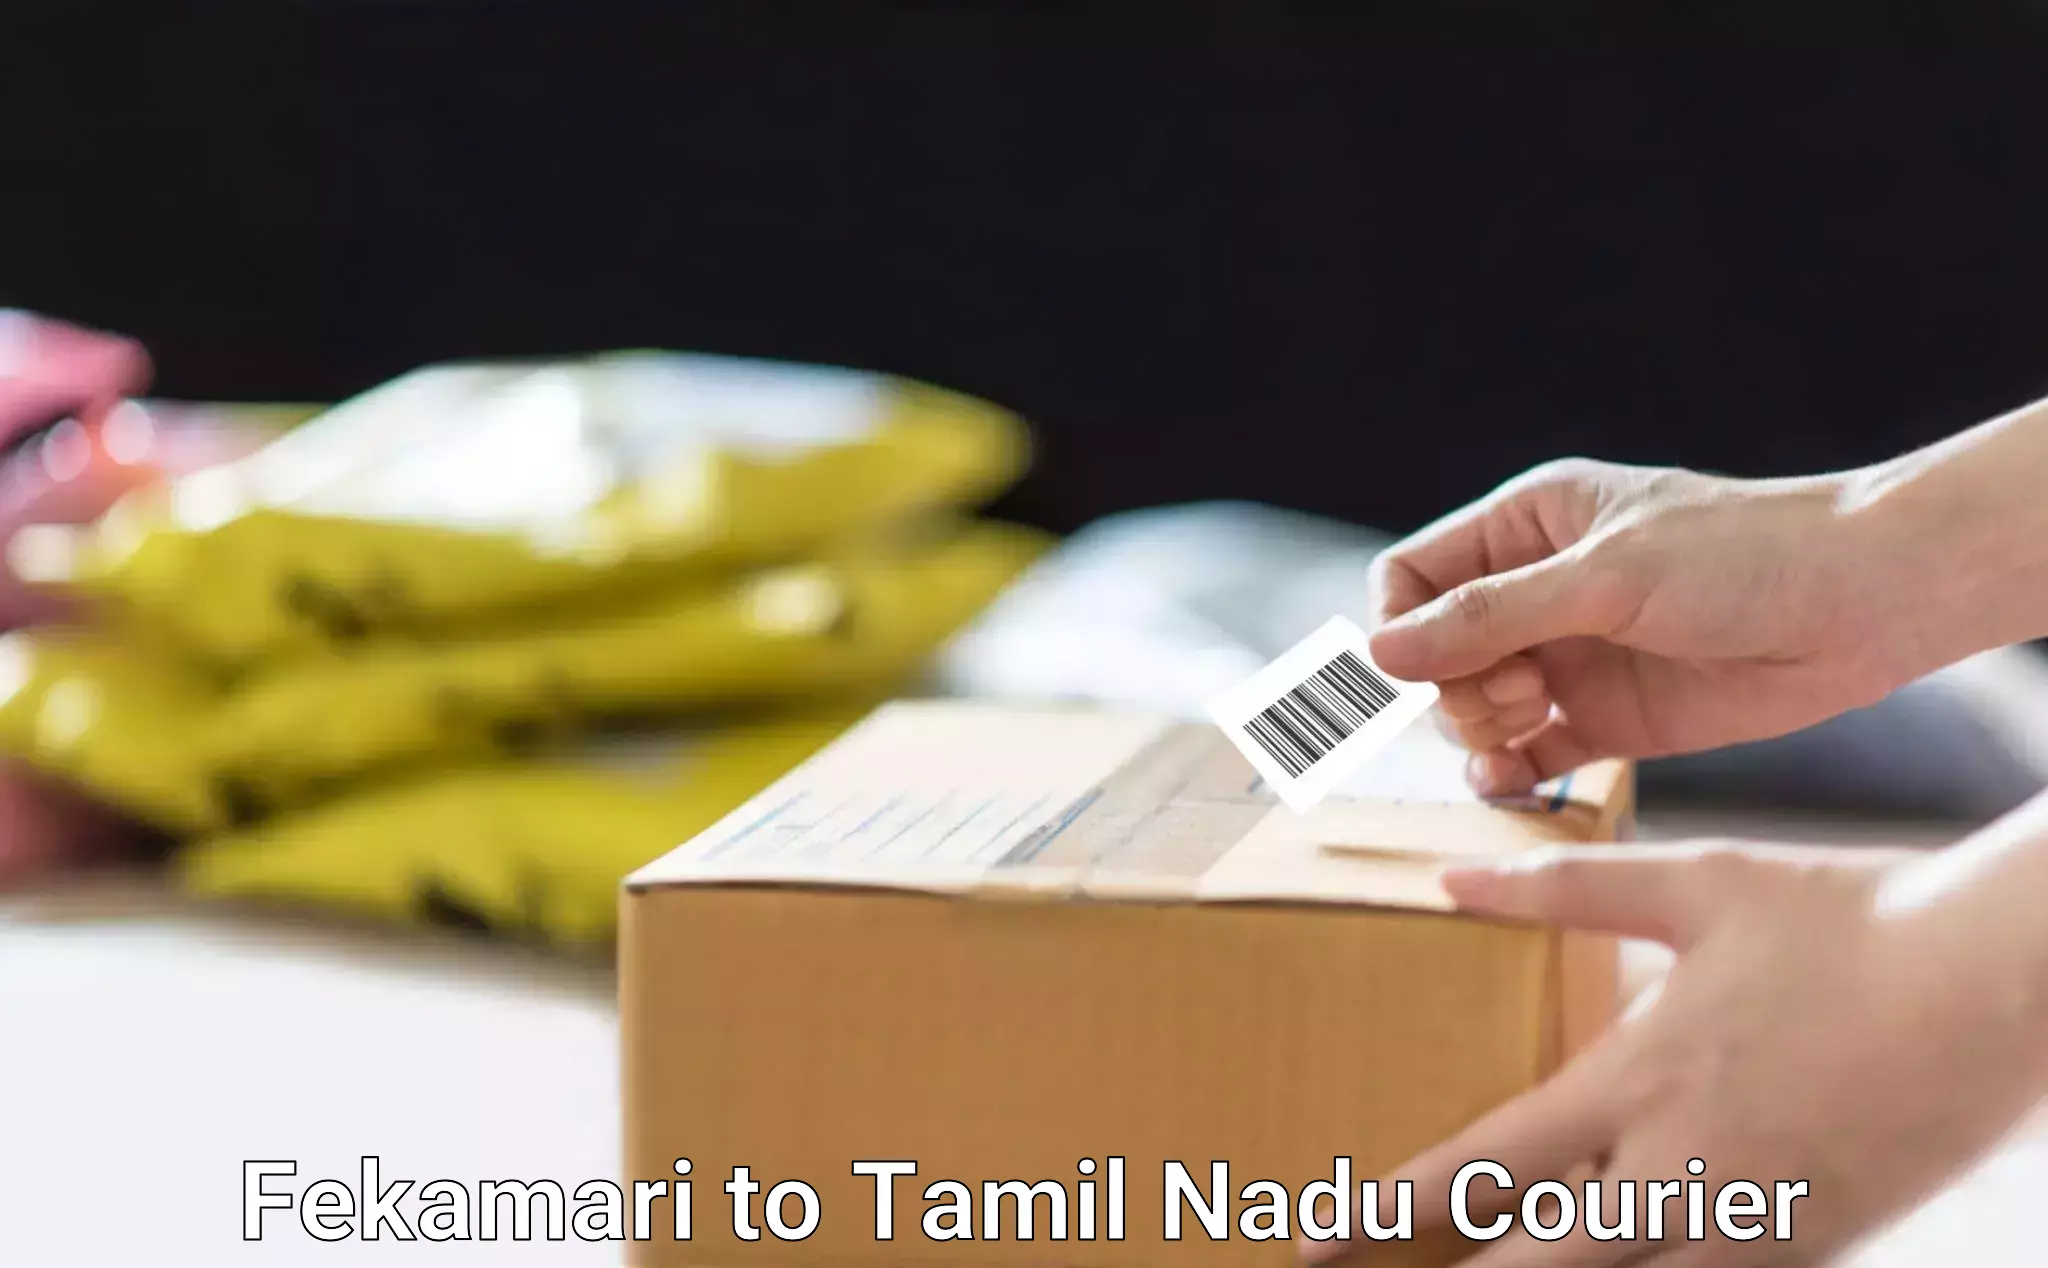 Remote area delivery Fekamari to Tamil Nadu